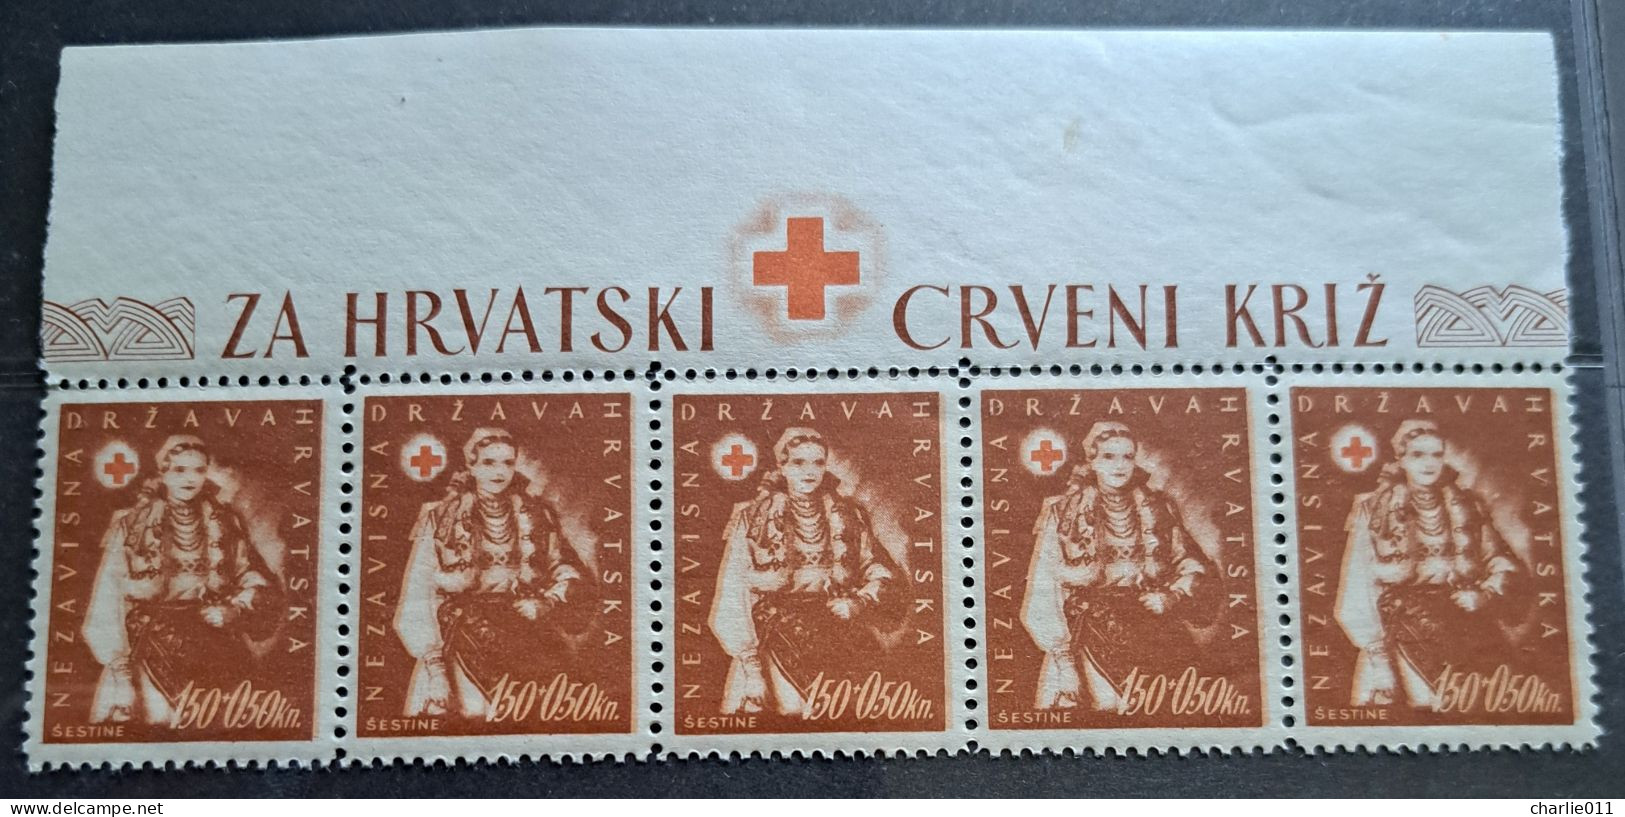 RED CROSS-1.50 + 0.50 K-NATIONAL COSTUMES-ŠESTINE-TOP OF THE SHEETLET-NDH-CROATIA-1942 - Croatia